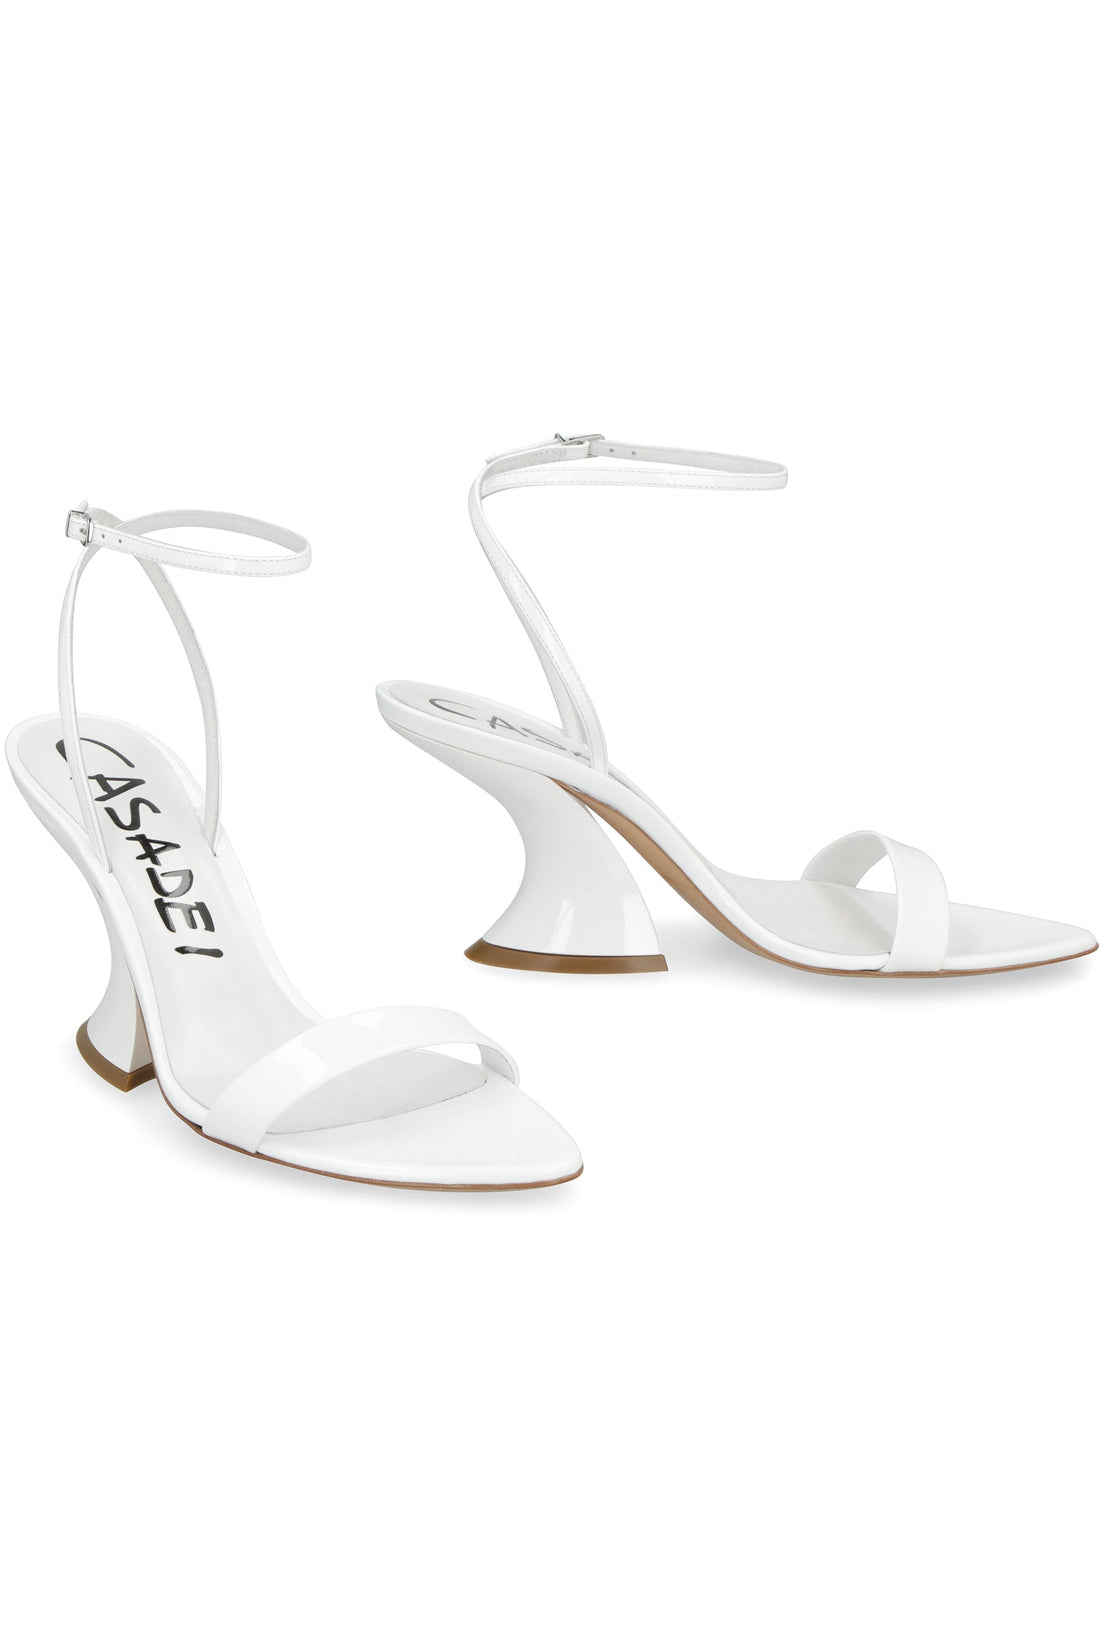 Casadei-OUTLET-SALE-Tiffany patent leather sandals-ARCHIVIST